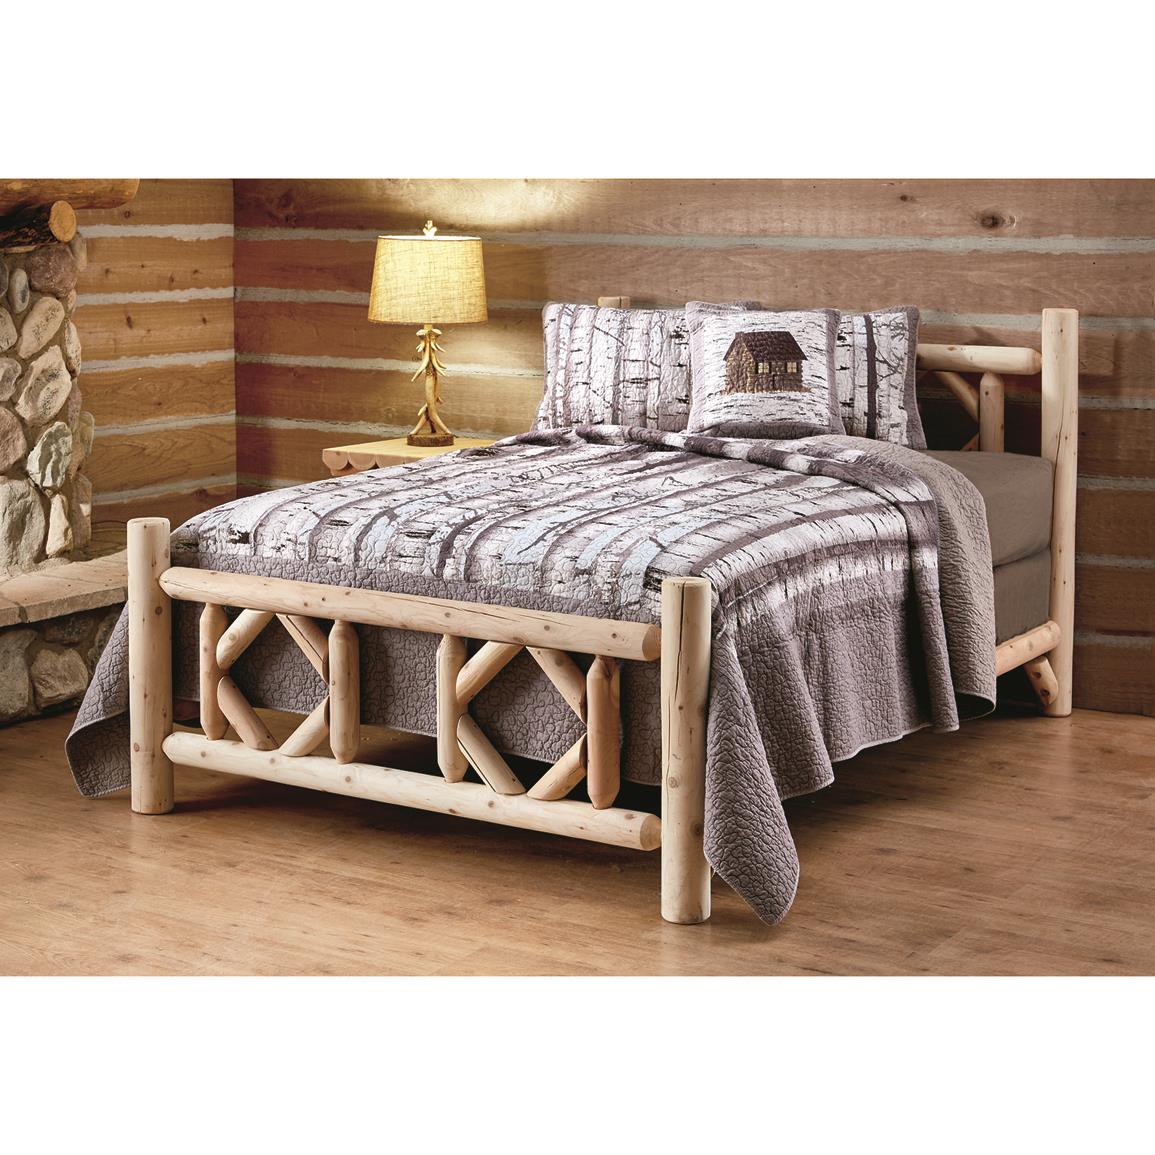 Castlecreek Diamond Cedar Log Bed King, White Birch Log Bed Frame